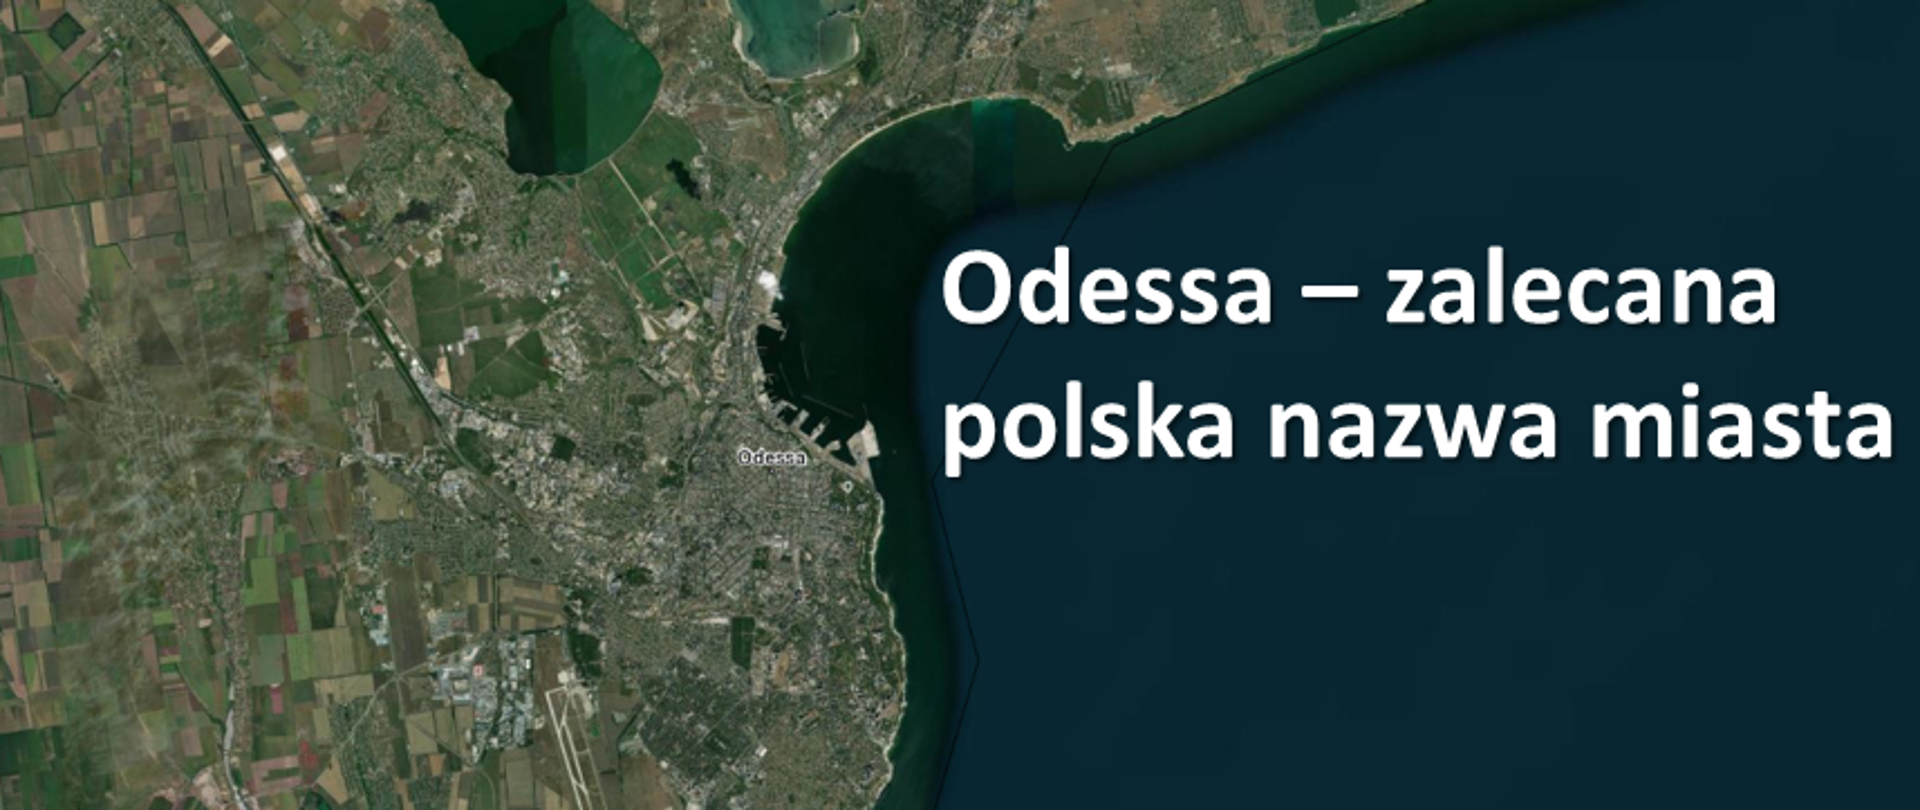 Odessa - zalecana polska nazwa miasta